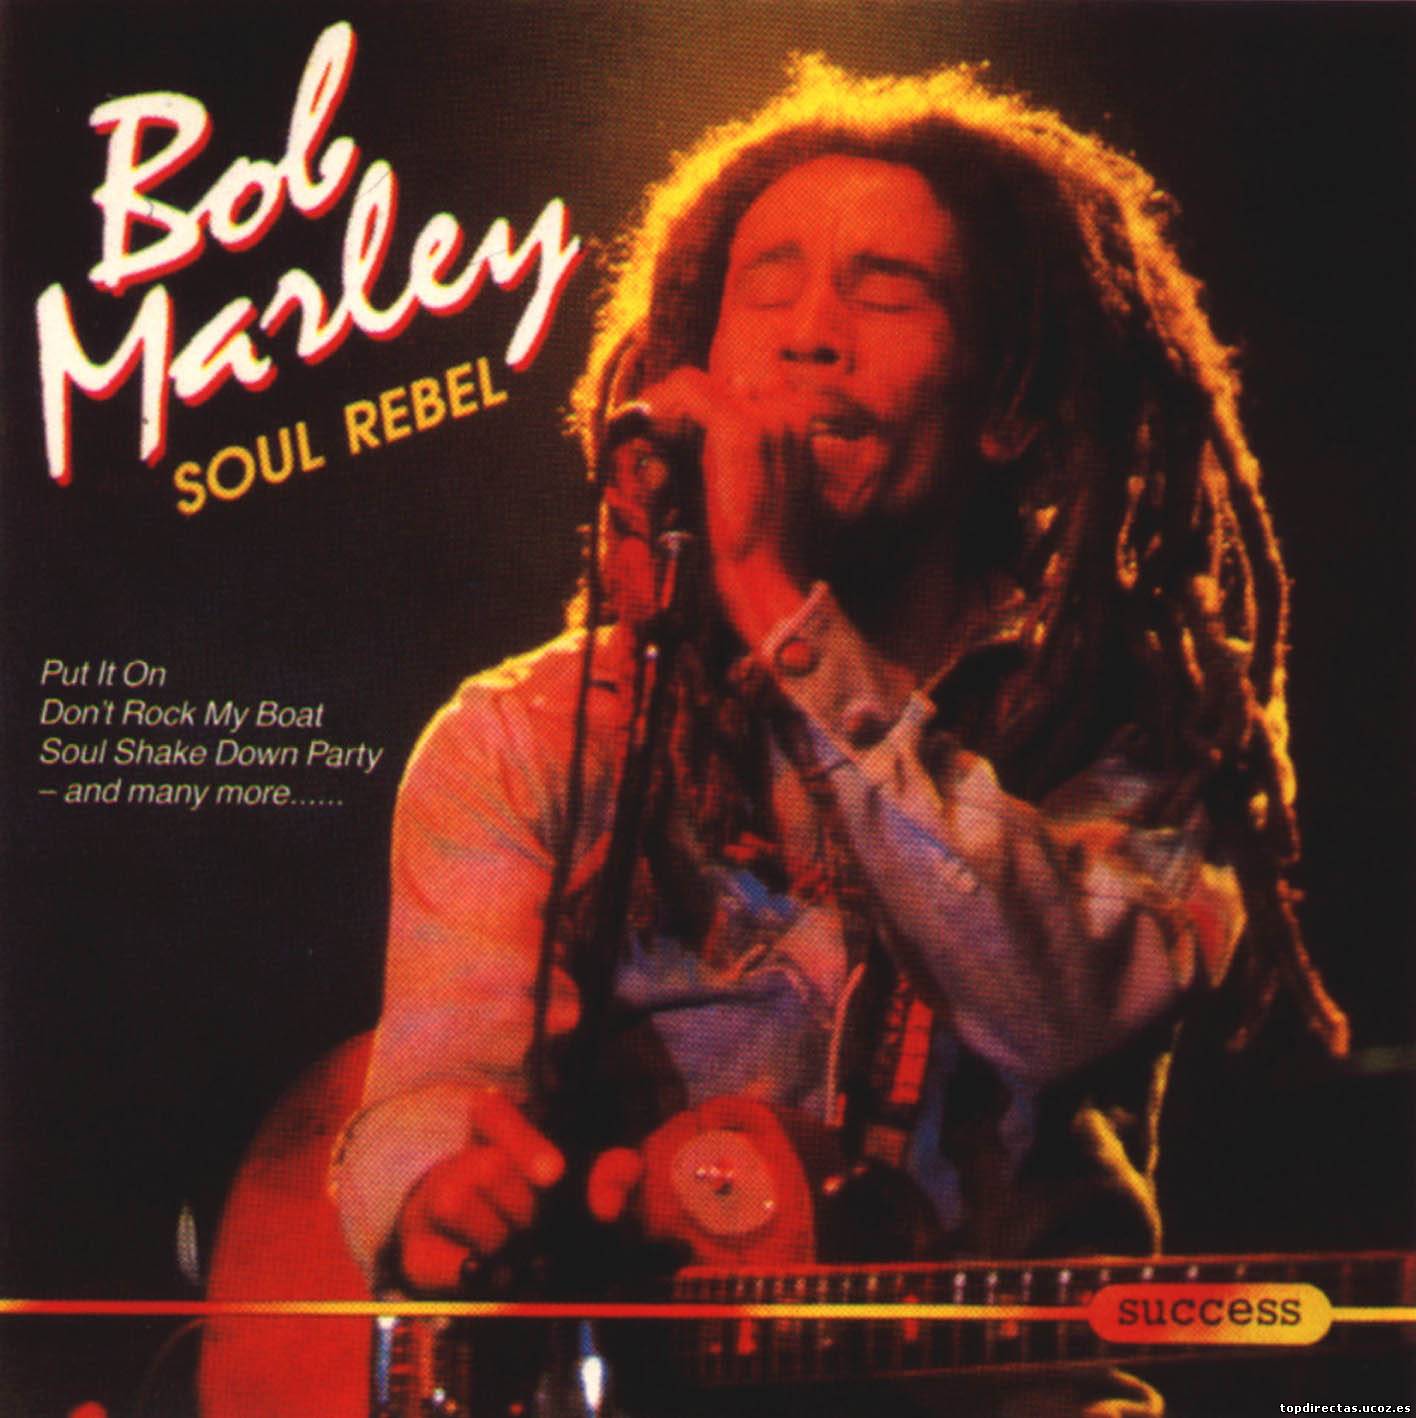 Bob Marley Soul Rebels [1970]